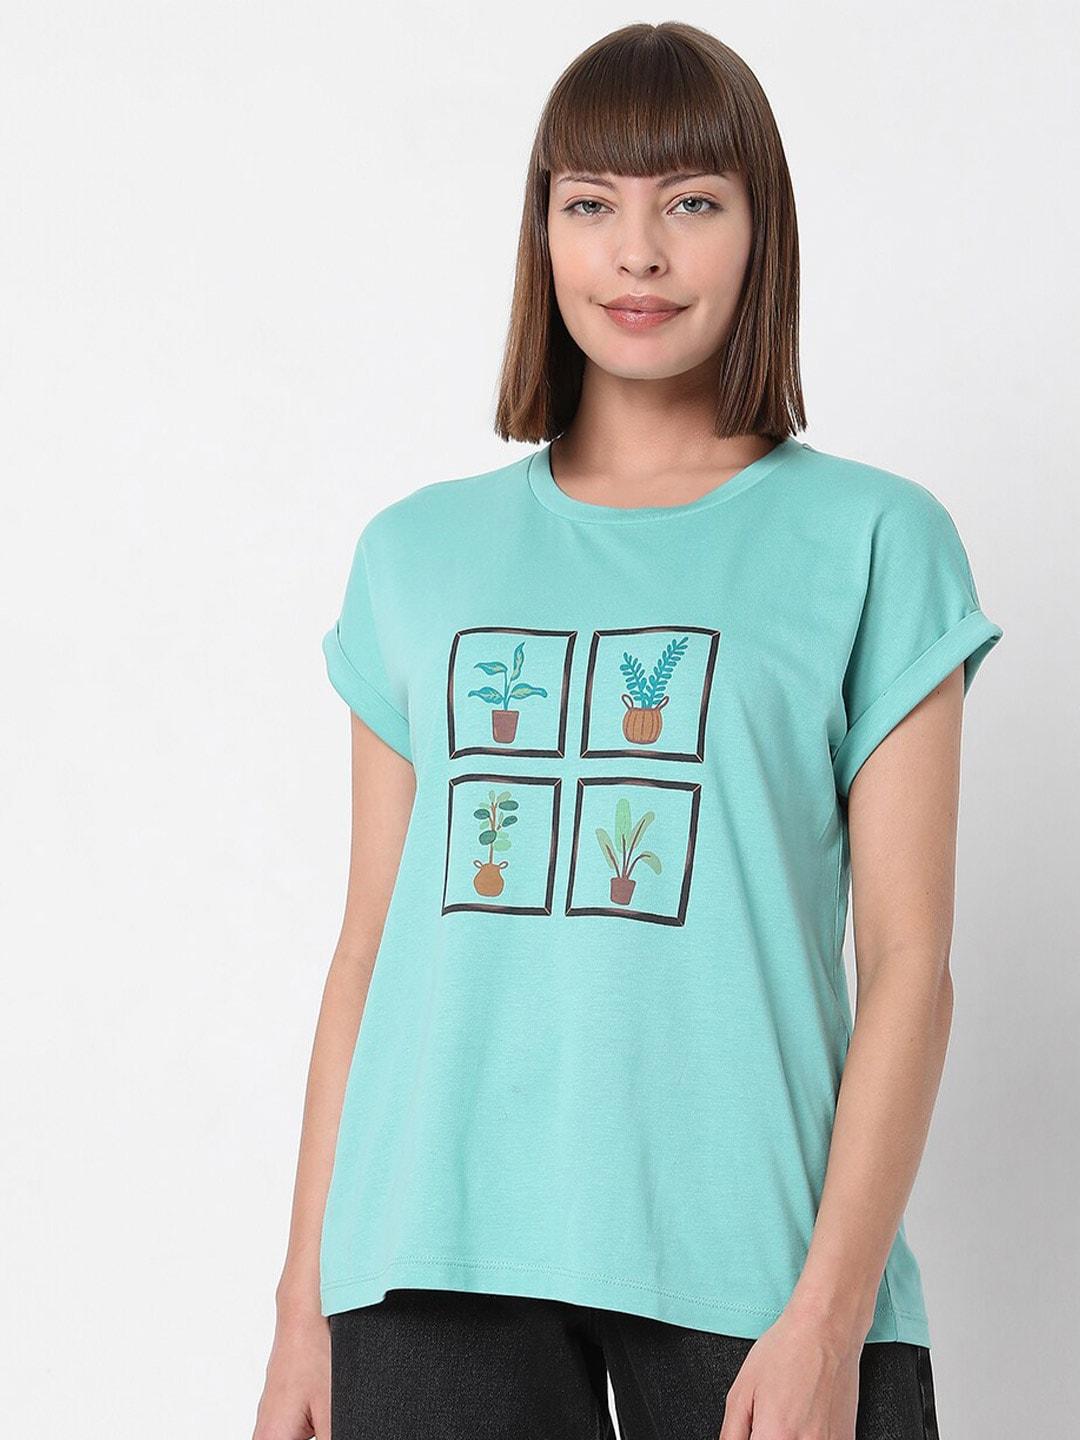 vero moda women green typography printed t-shirt